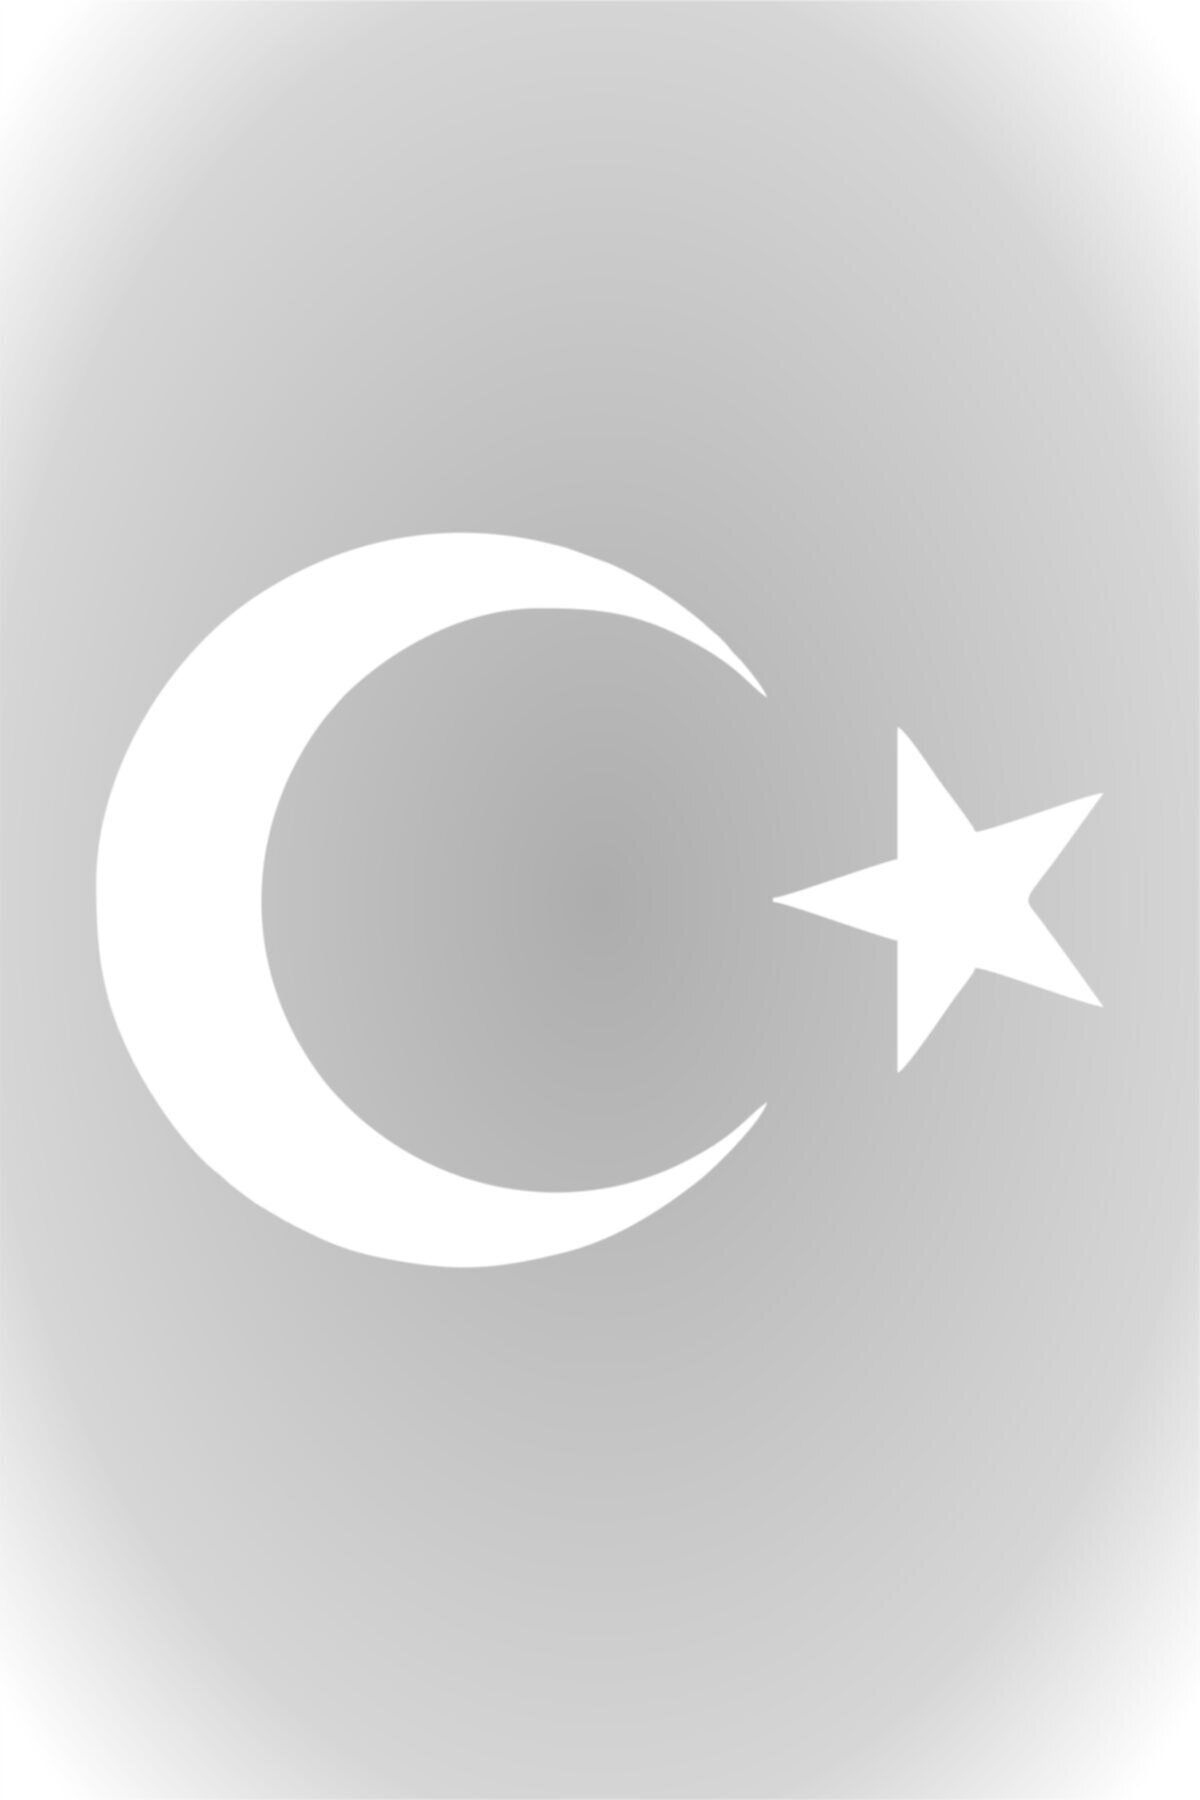 HMNL Ay Yıldız Sticker Türk Bayrağı Sticker 10 X 7,5 Cm Beyaz